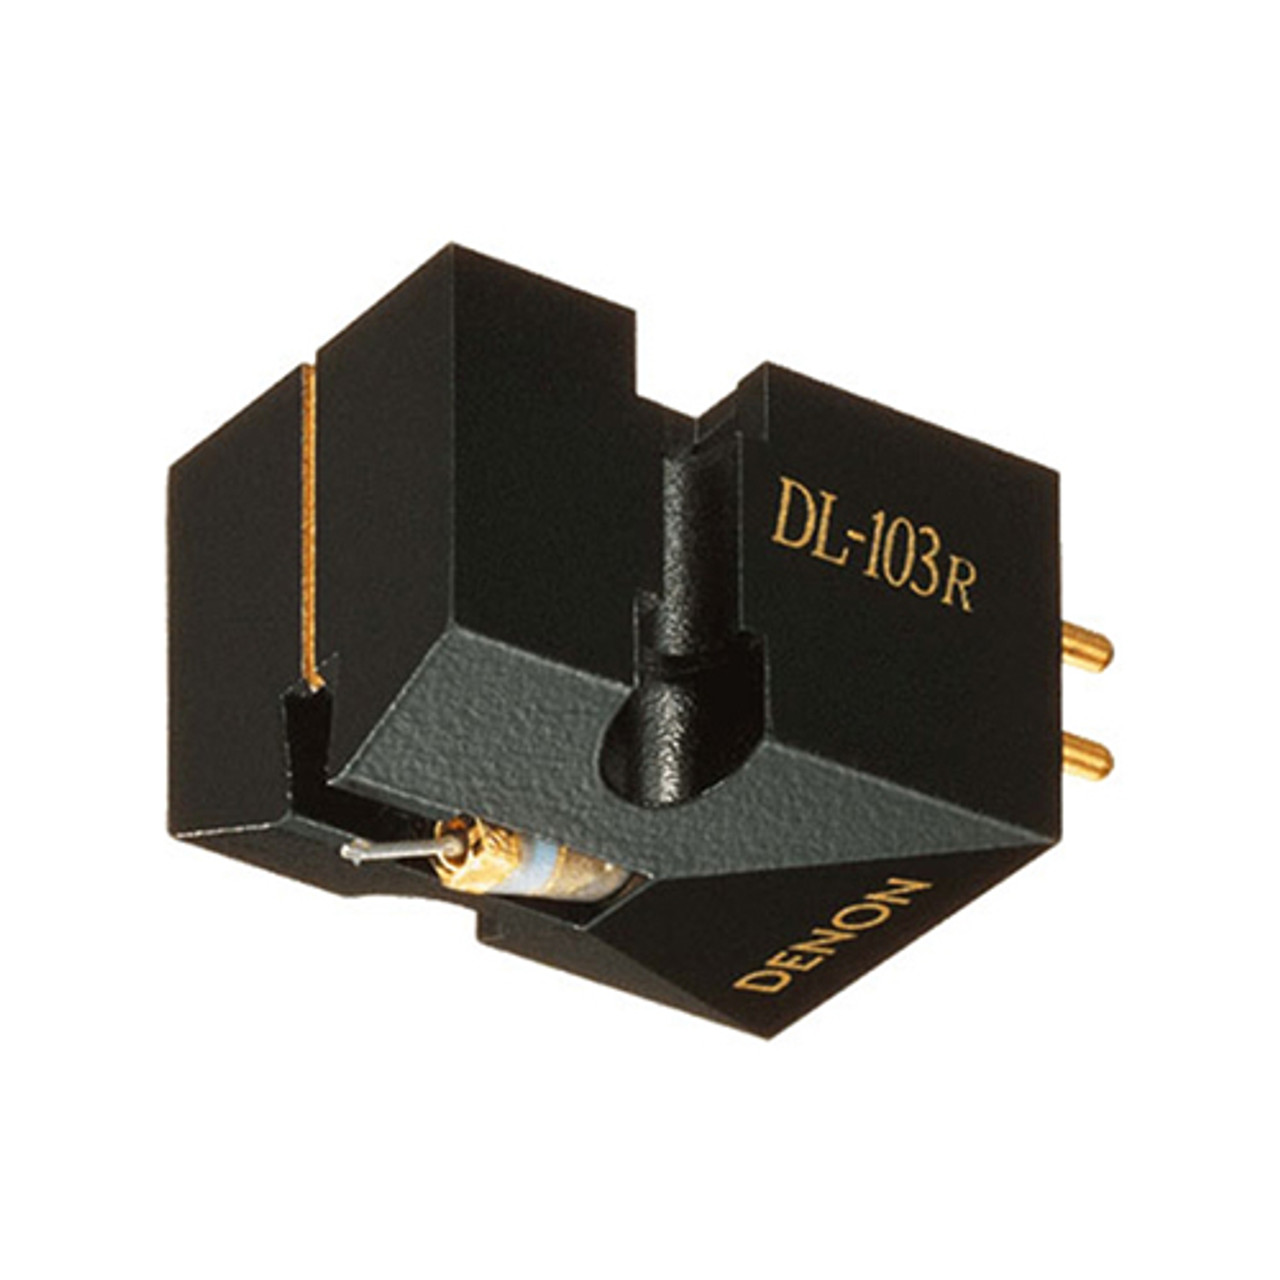 Denon - DL-103R MC Phono Cartridge